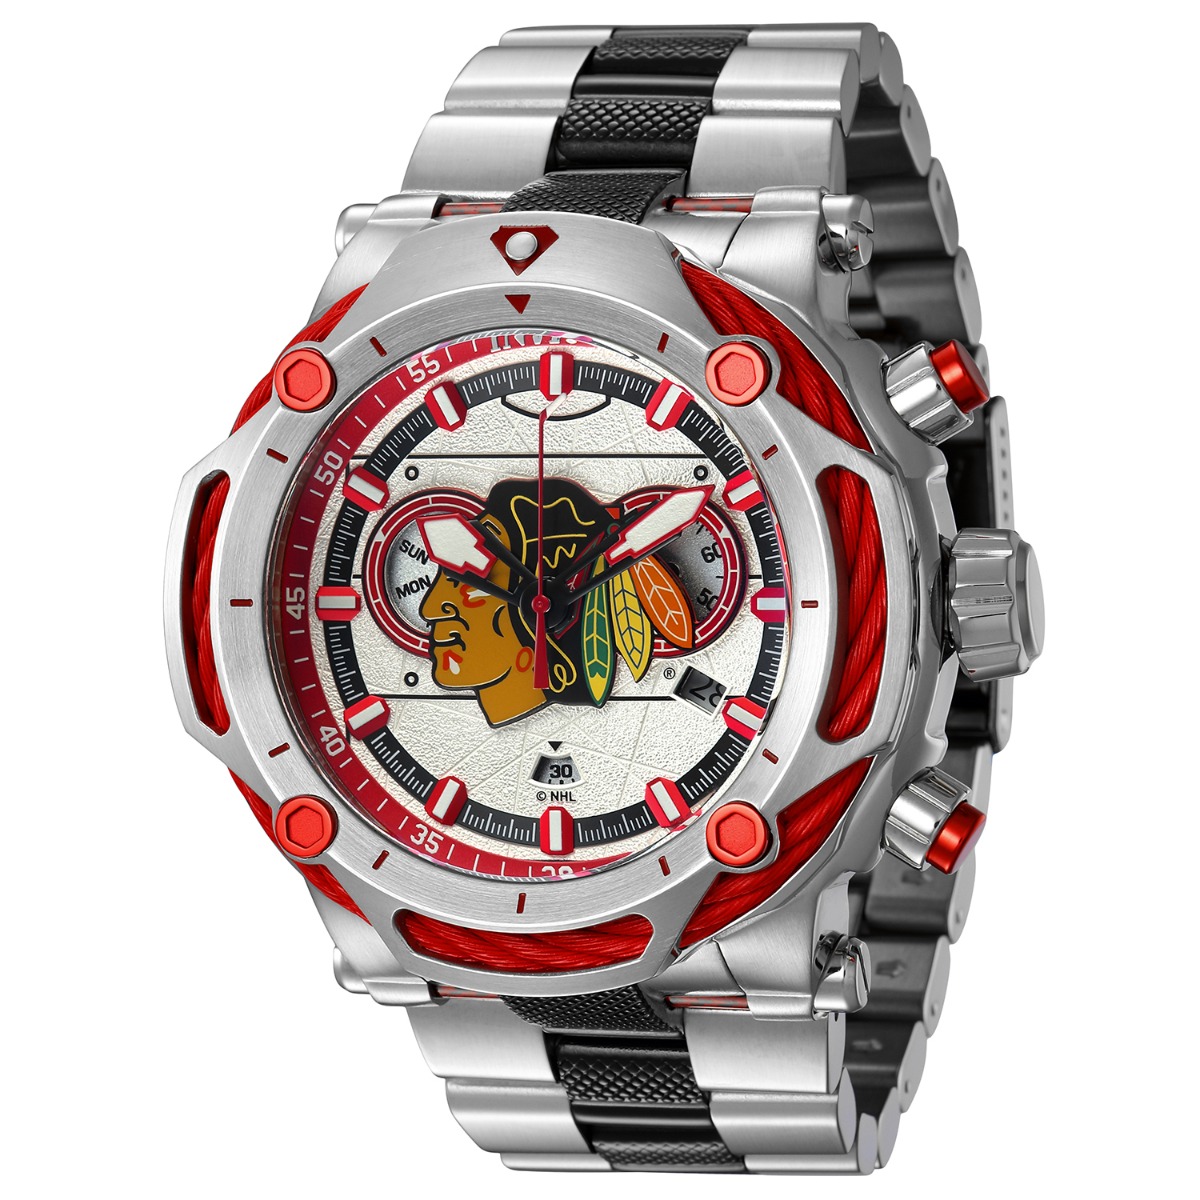 Invicta NHL Mens Watches (Mod 42106) Invicta Watches